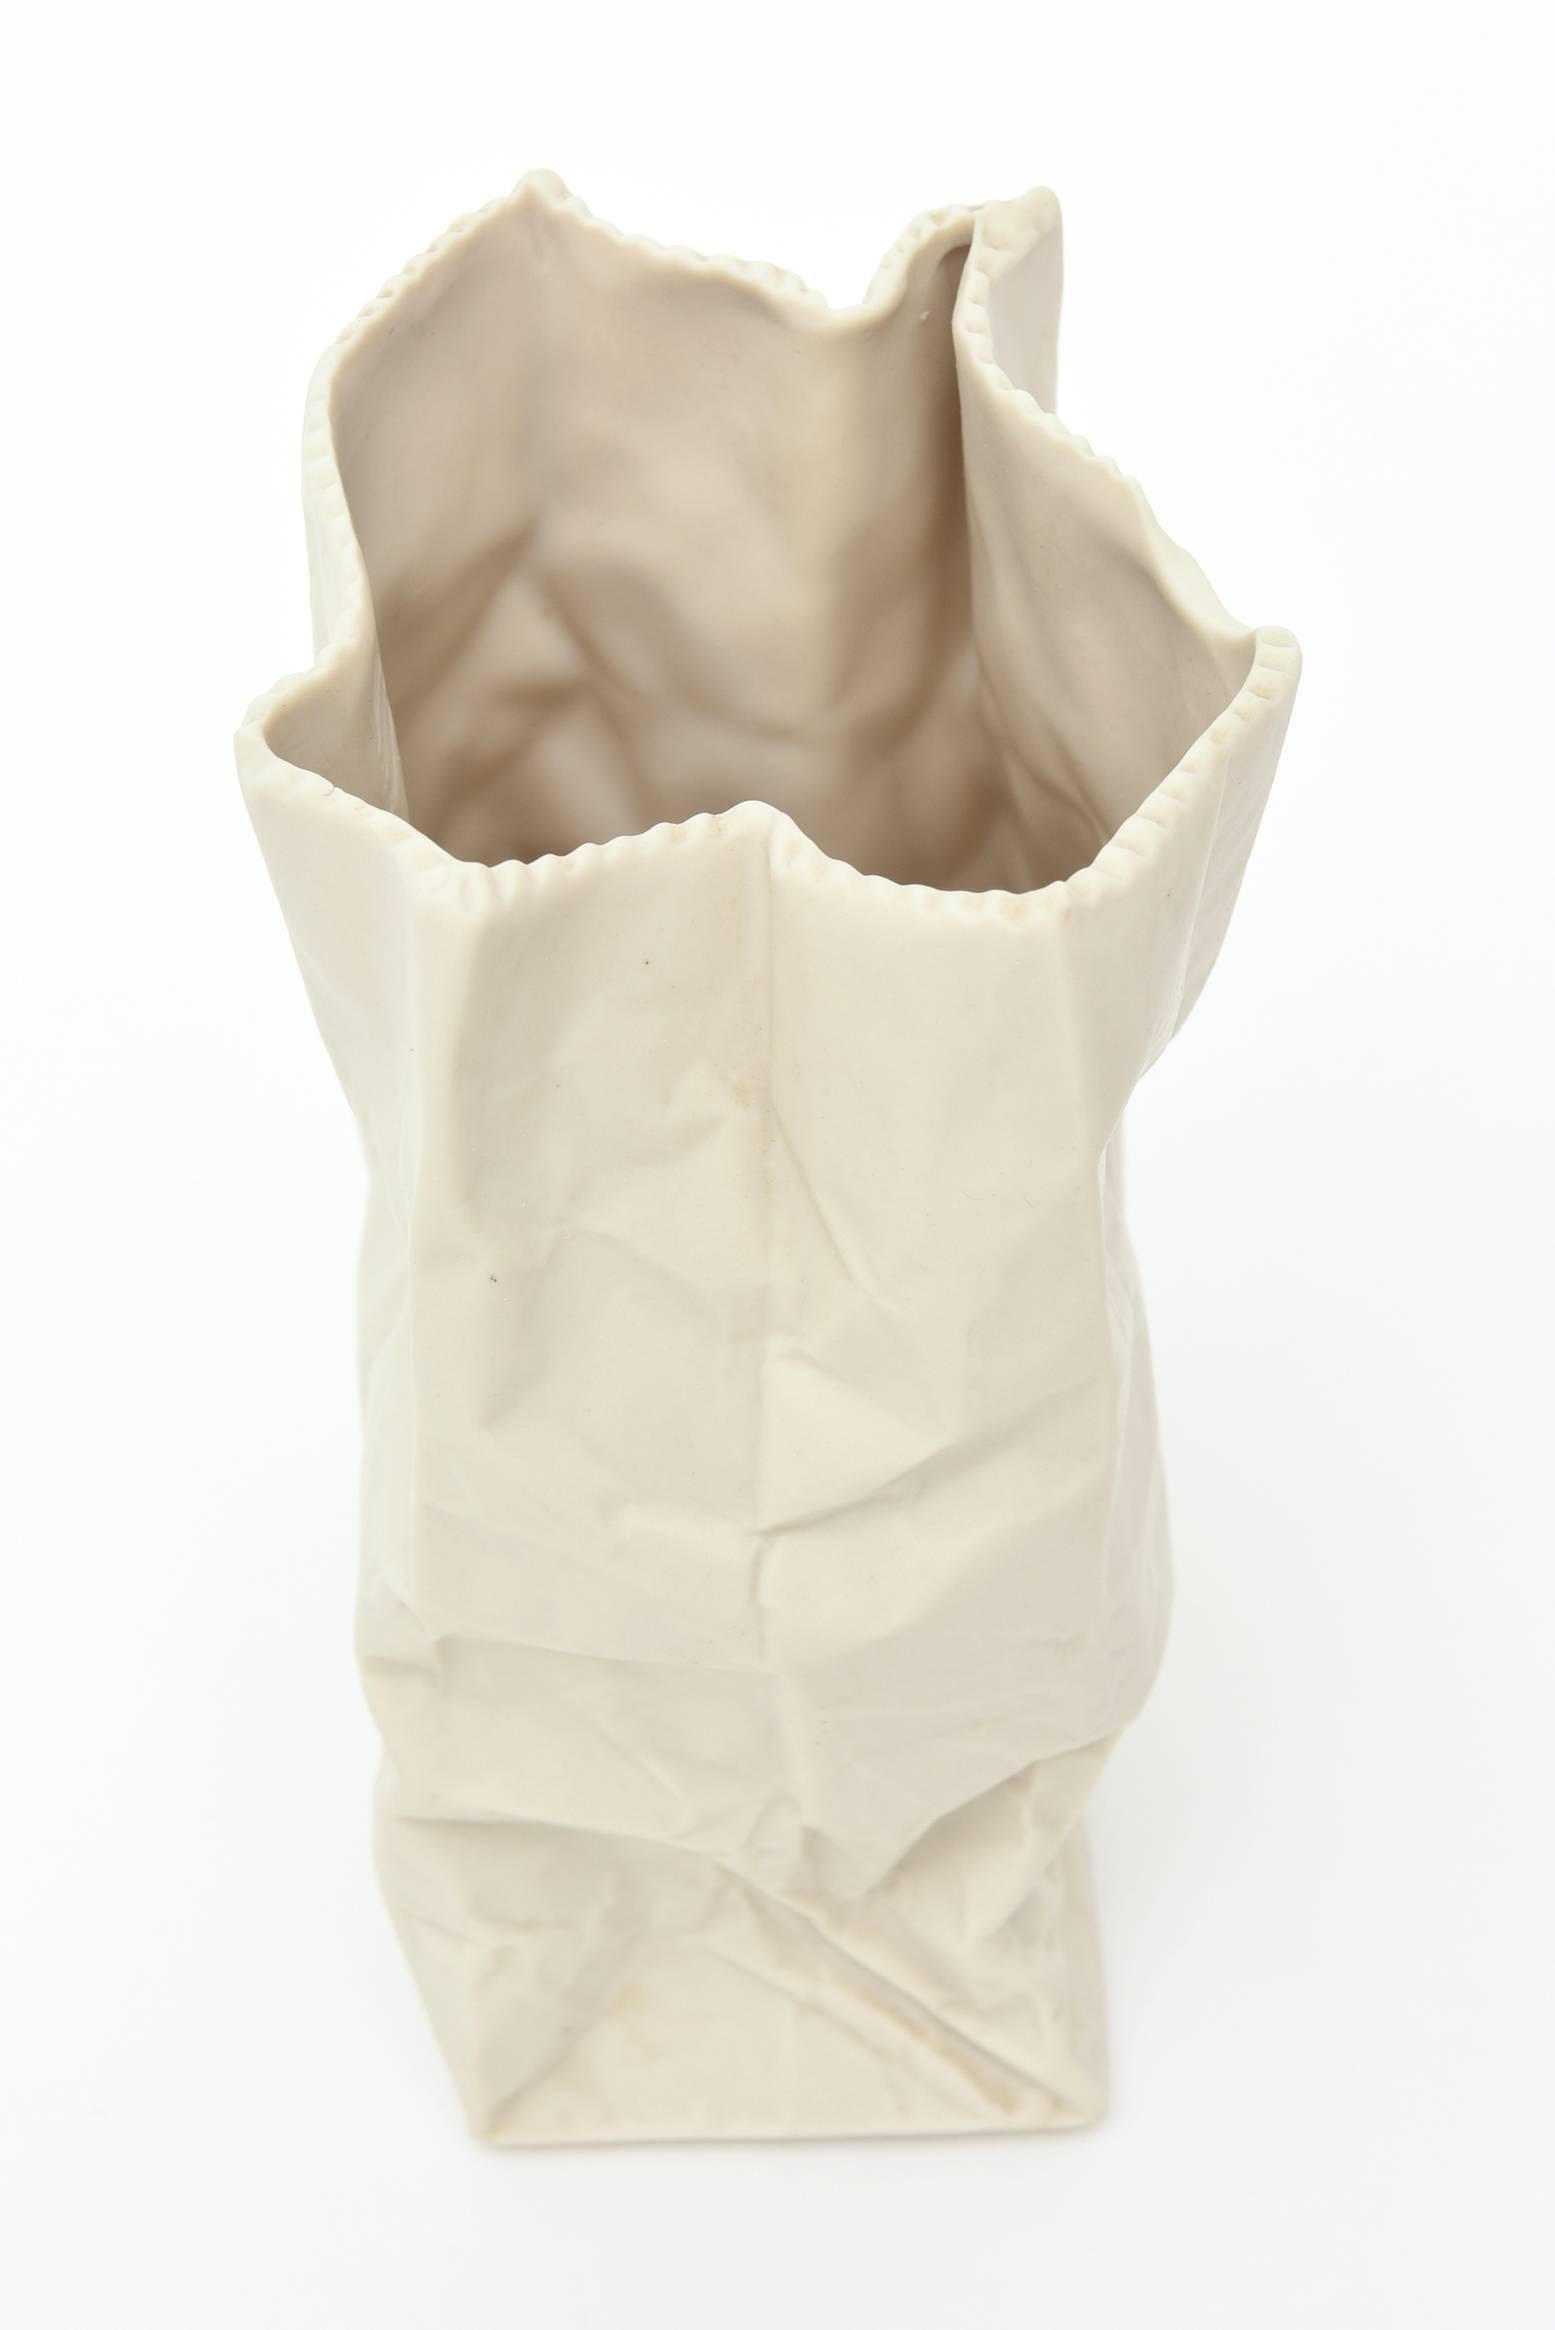 Crushed and Folded Bag Ceramic Sculpture or Vase /SATURDAY SALE 2